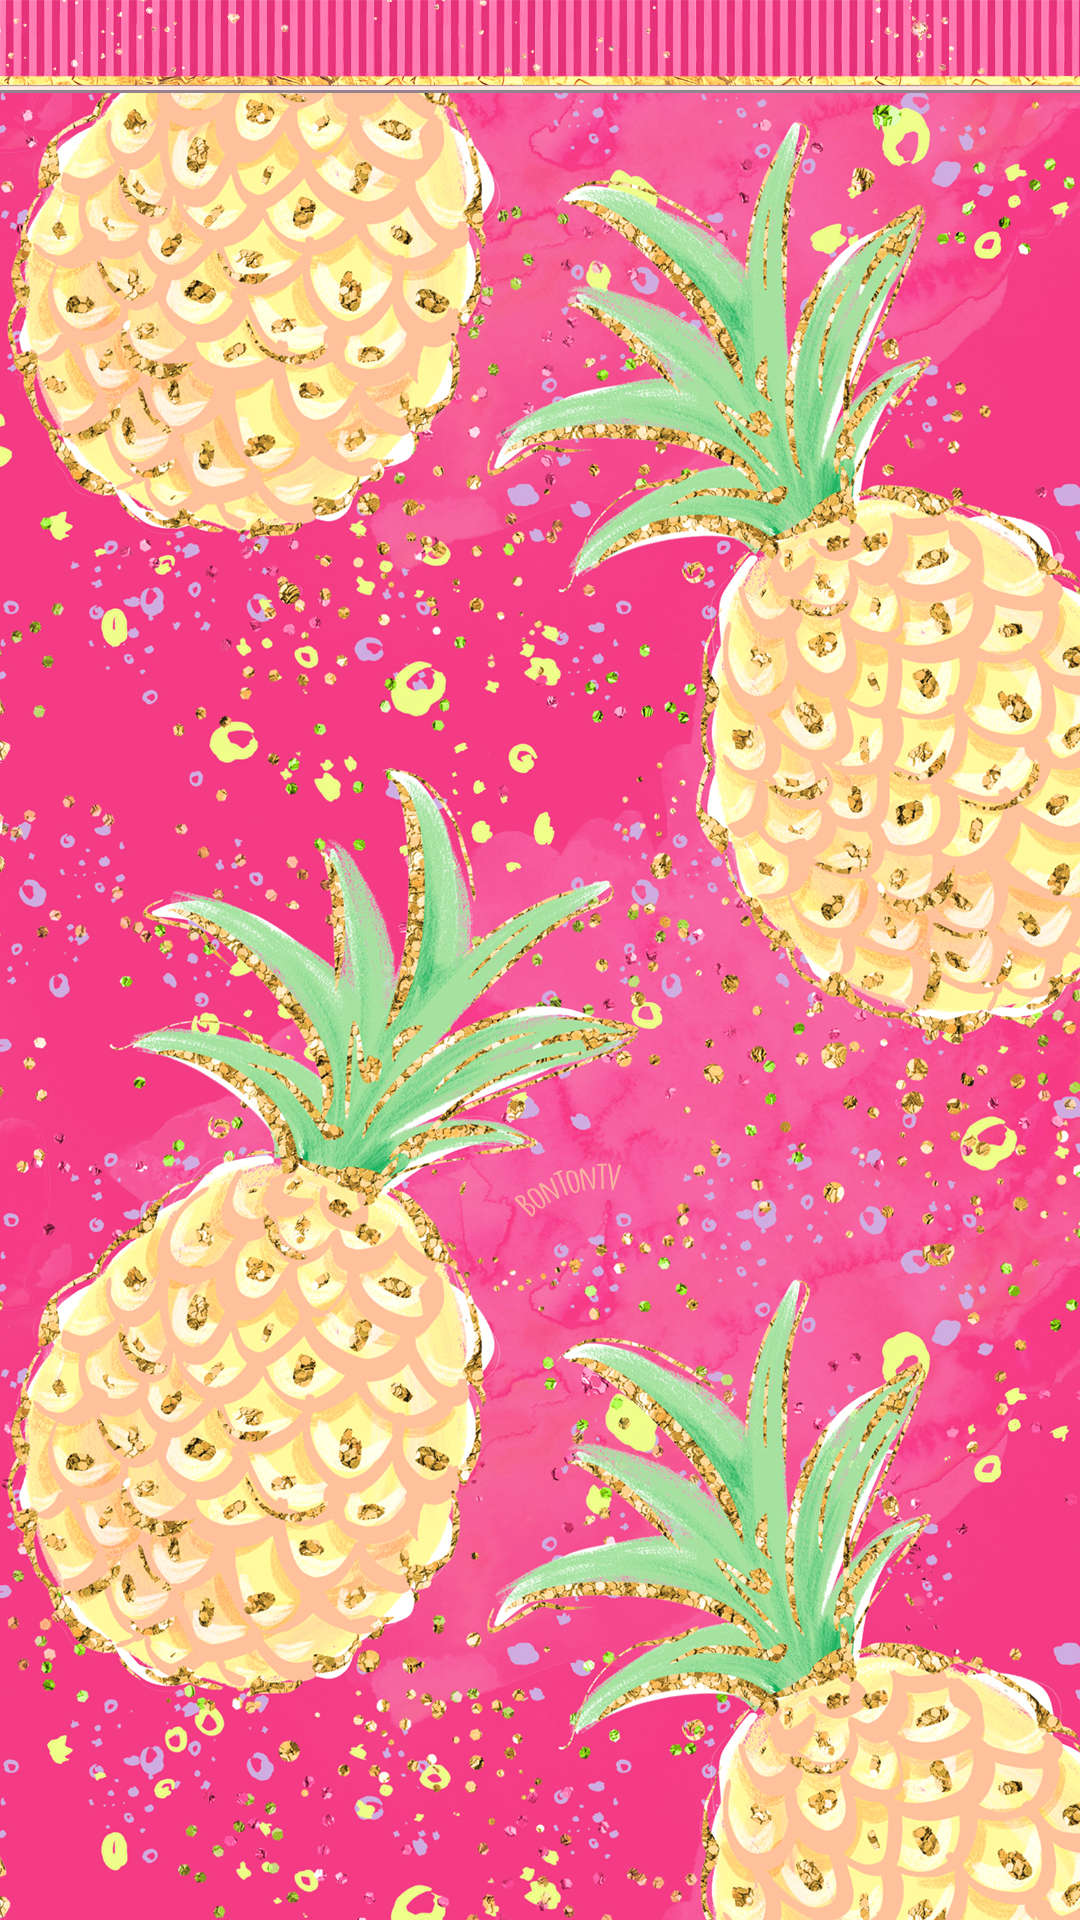 Phone Wallpaper BonTon TV Download iPhone Wallpaper, Androi. Glitter phone wallpaper, Pink wallpaper iphone, Cute summer wallpaper